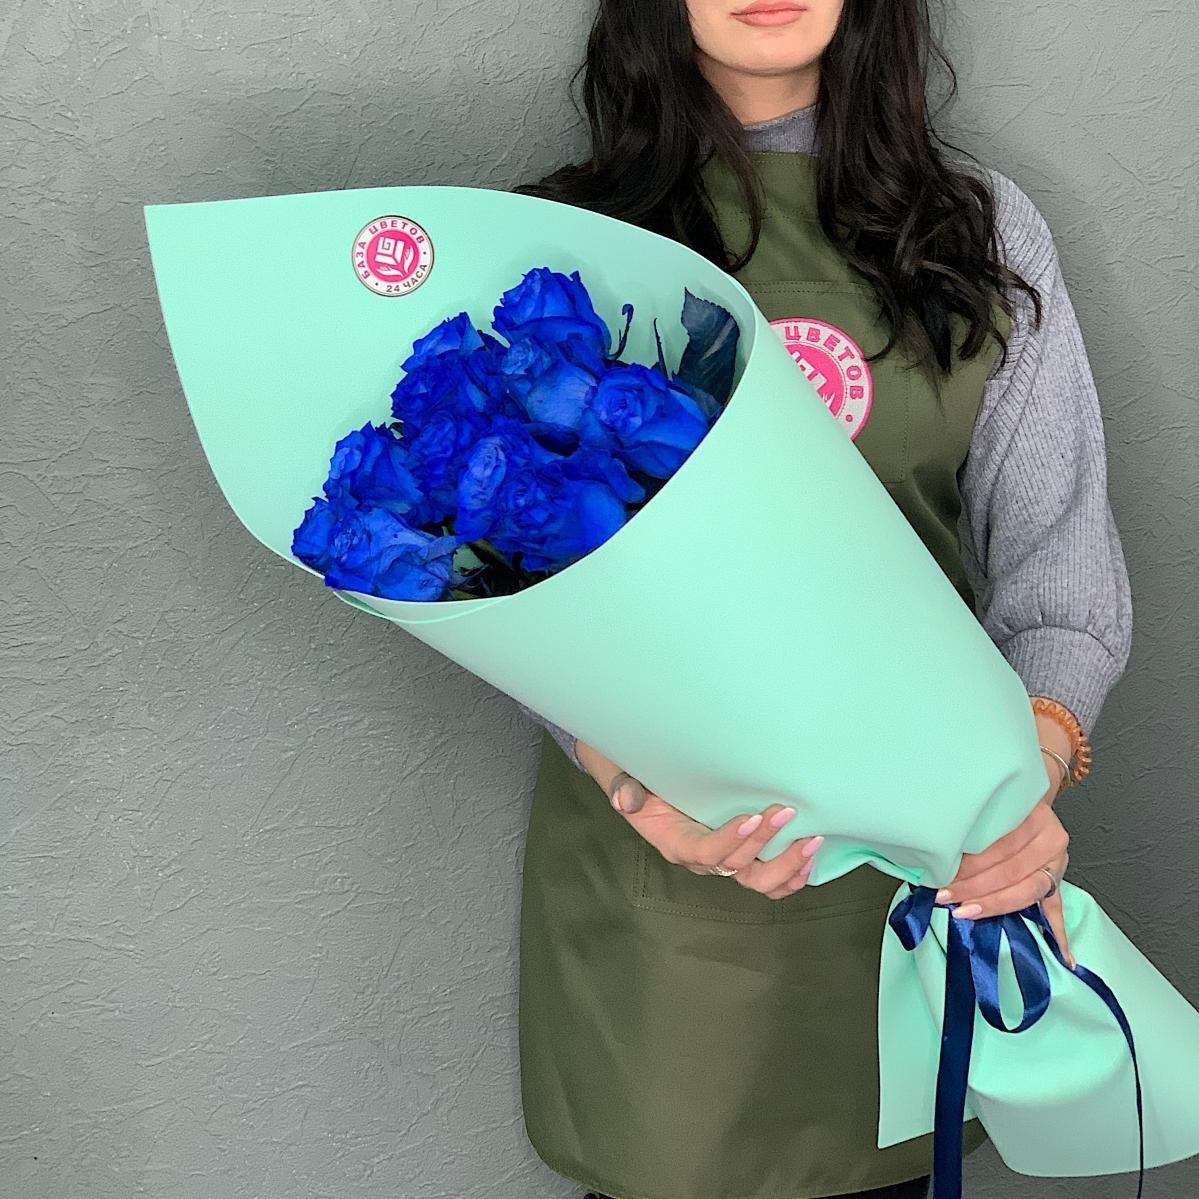 Букеты из синих роз (Эквадор) Артикул - 203550